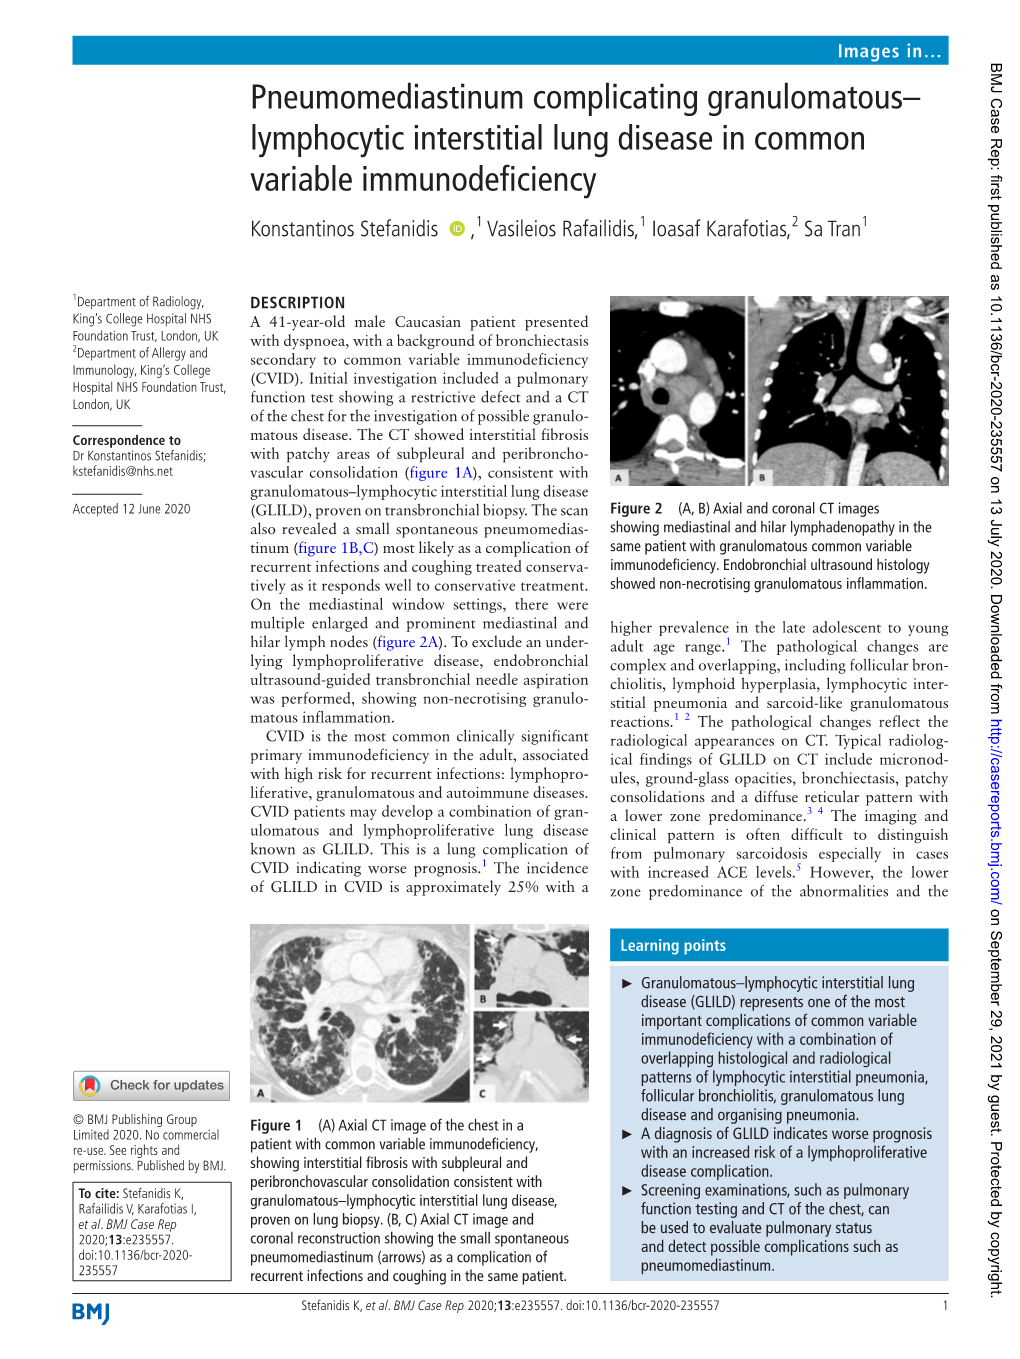 Pneumomediastinum Complicating Granulomatous–Lymphocytic